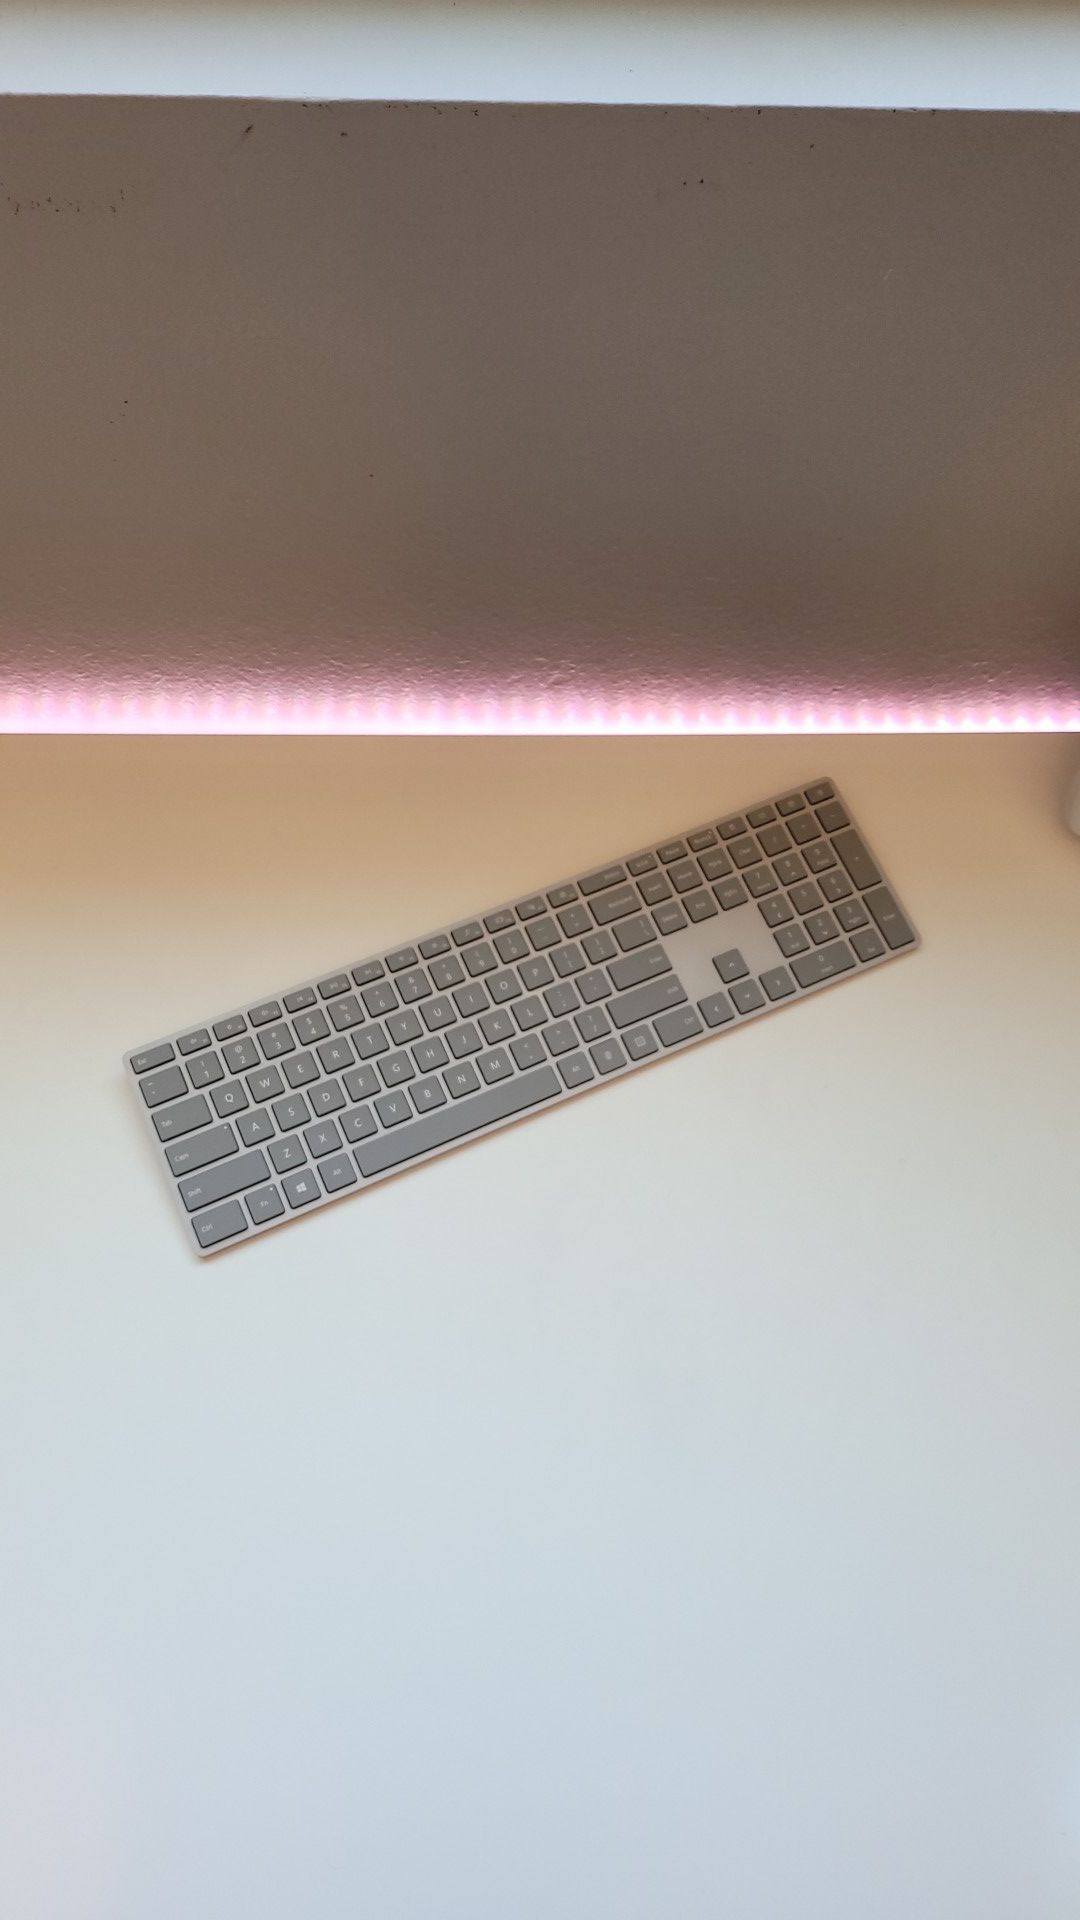 Microsoft surface keyboard with fingerprint sensor